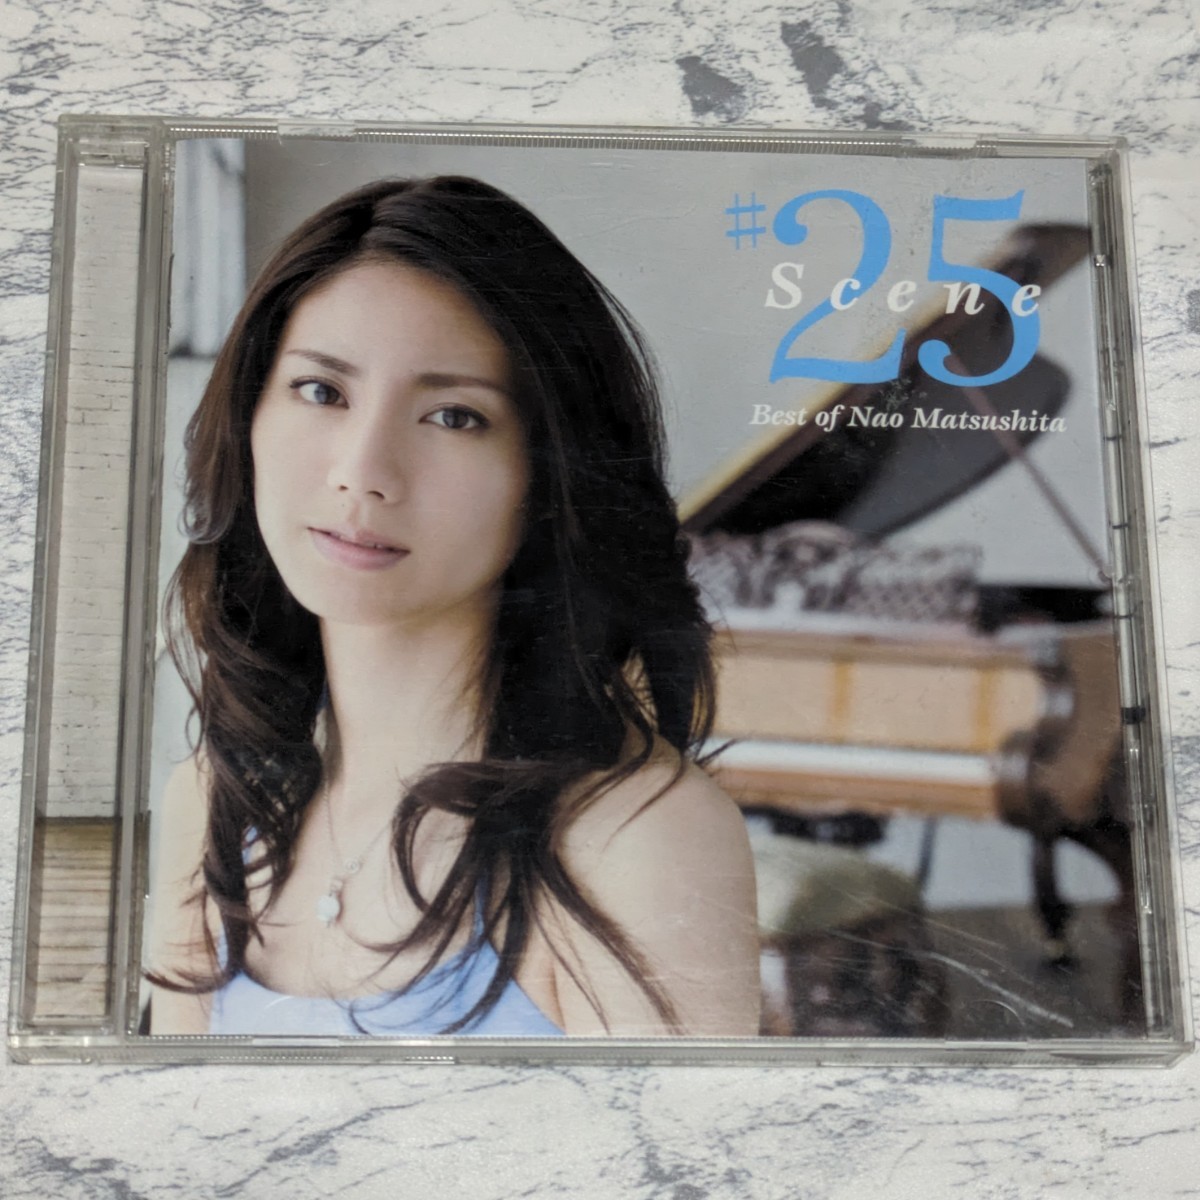 【CD】松下奈緒 Scene #25 Best of Nao Matsushita ベストCDアルバム ゲゲゲの女房 ありがとう 他 ピアノカバー_画像1